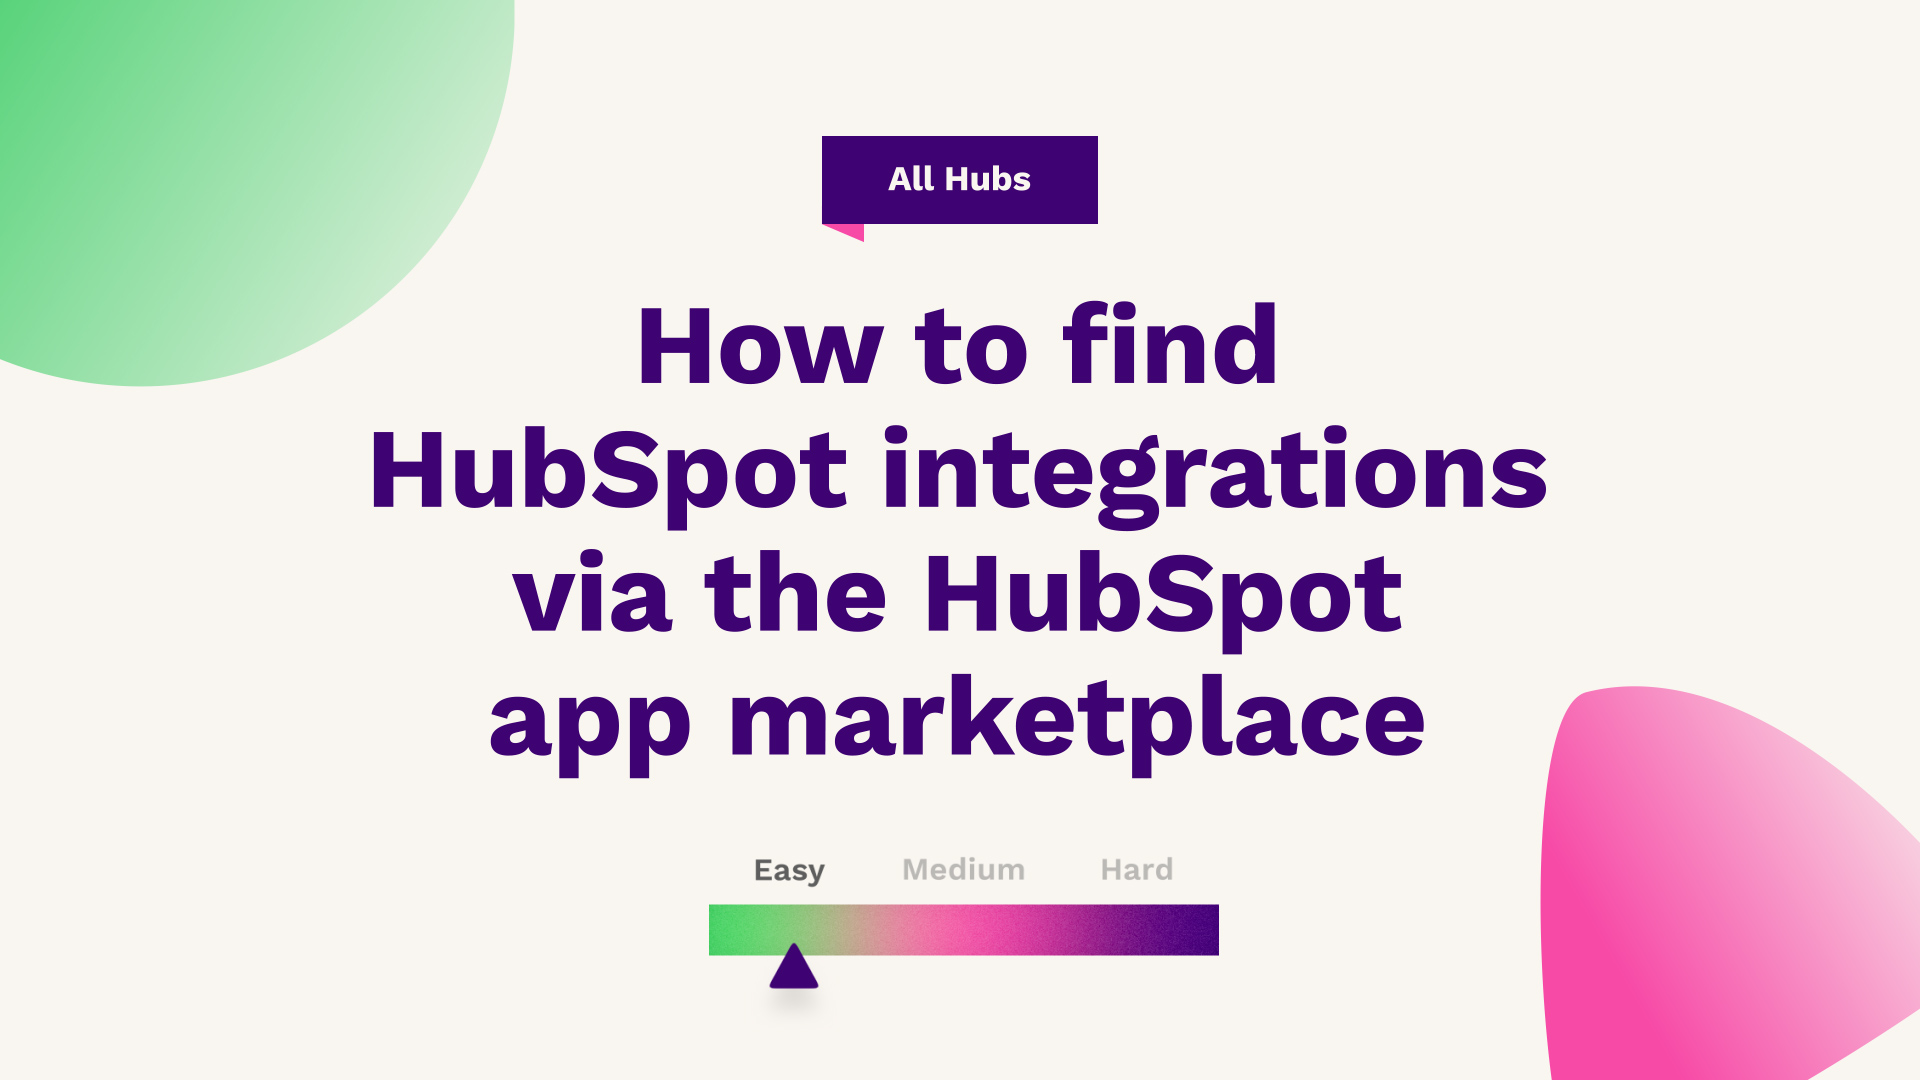 How to find HubSpot integrations via the HubSpot app marketplace